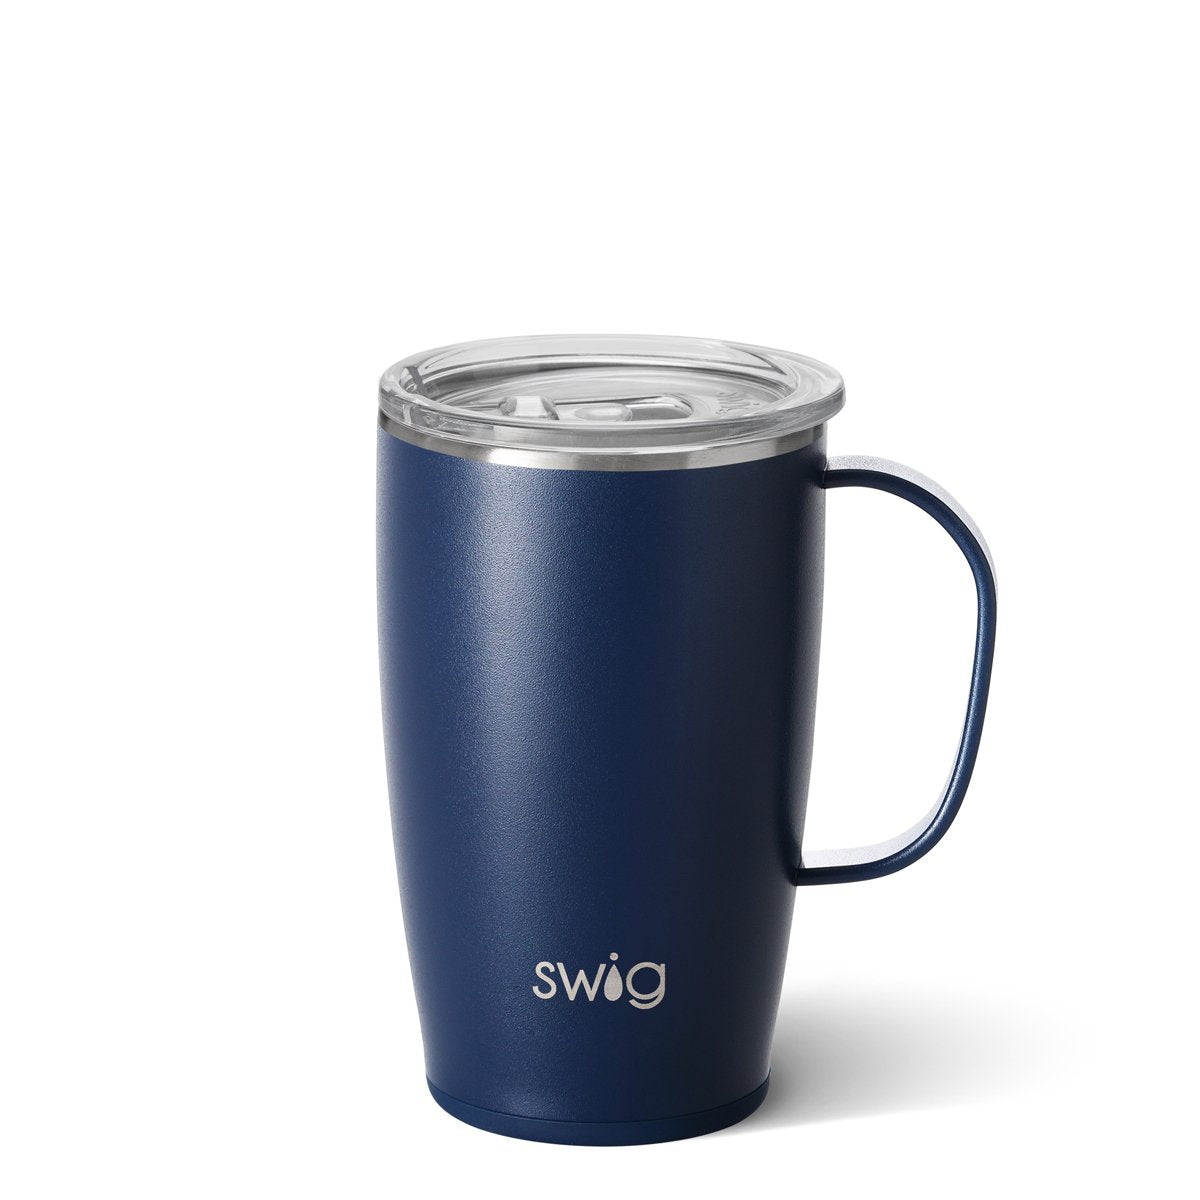 SWIG COFFEE MUG - NAVY BLUE